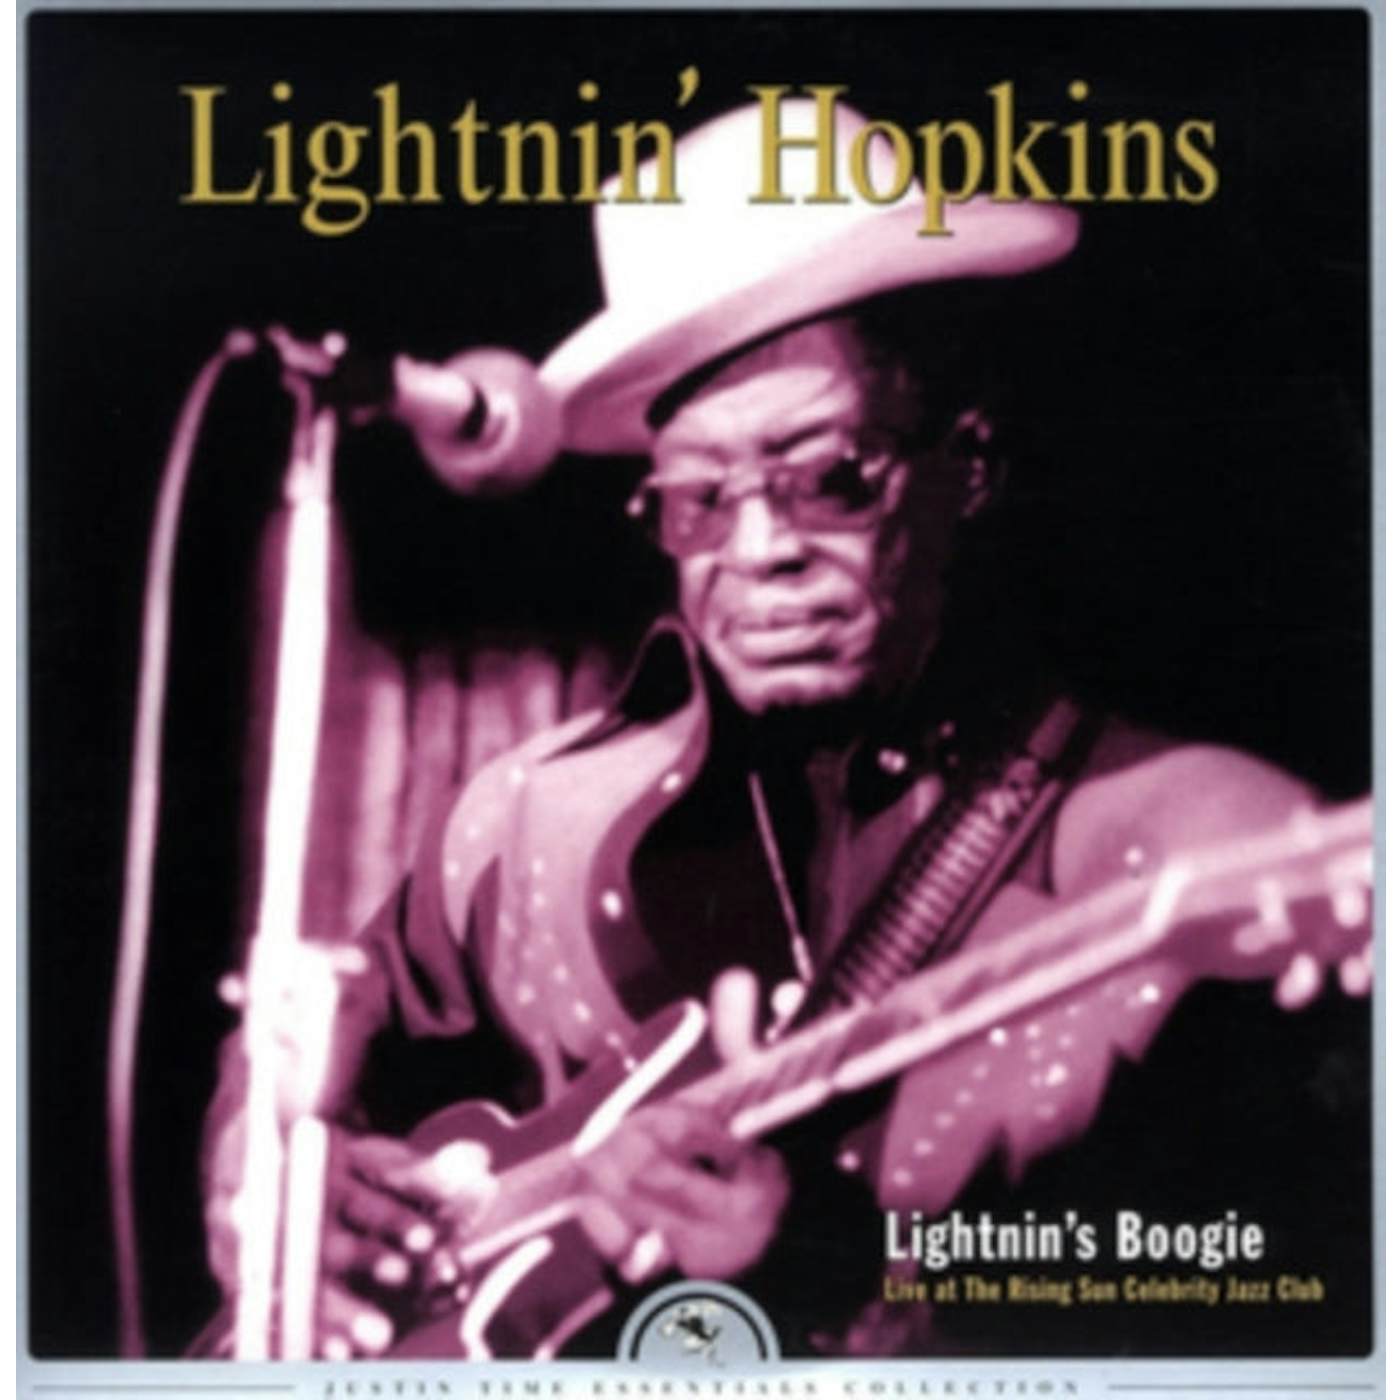 Lightnin' Hopkins LP - Lightnins Boogie (Vinyl)